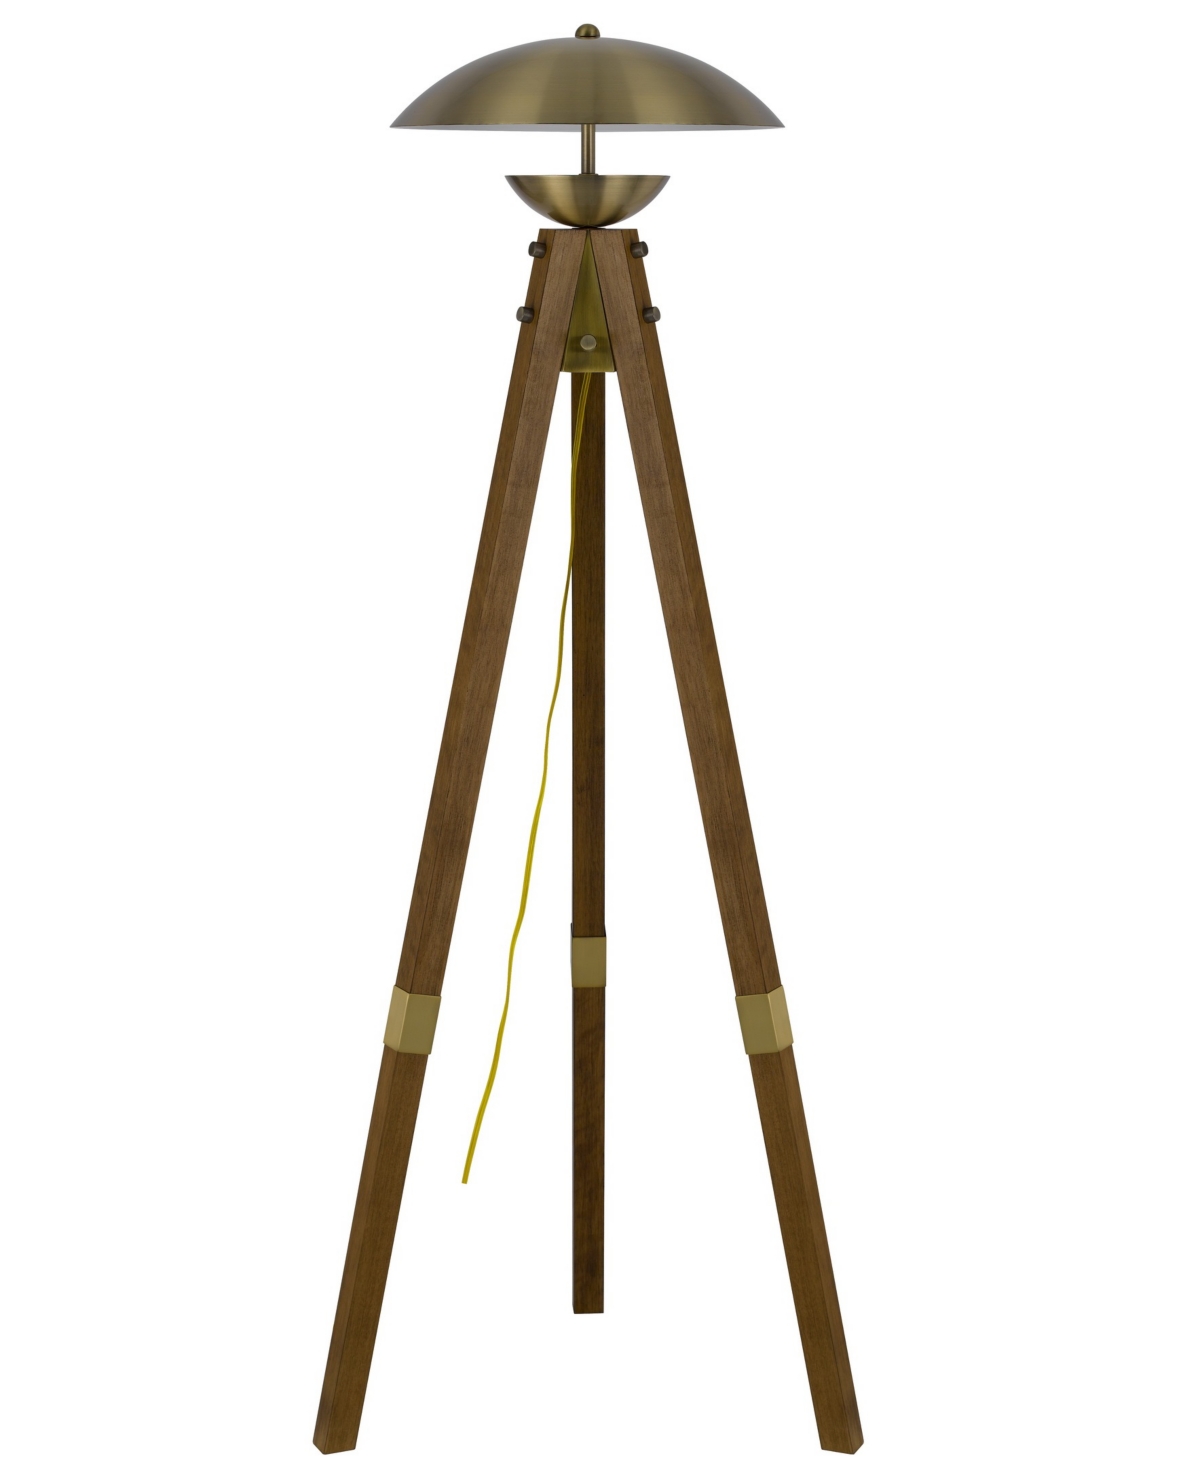 Cal Lighting Lakeland 55" Height Wood And Metal Floor Lamp In Antique Brass,wood